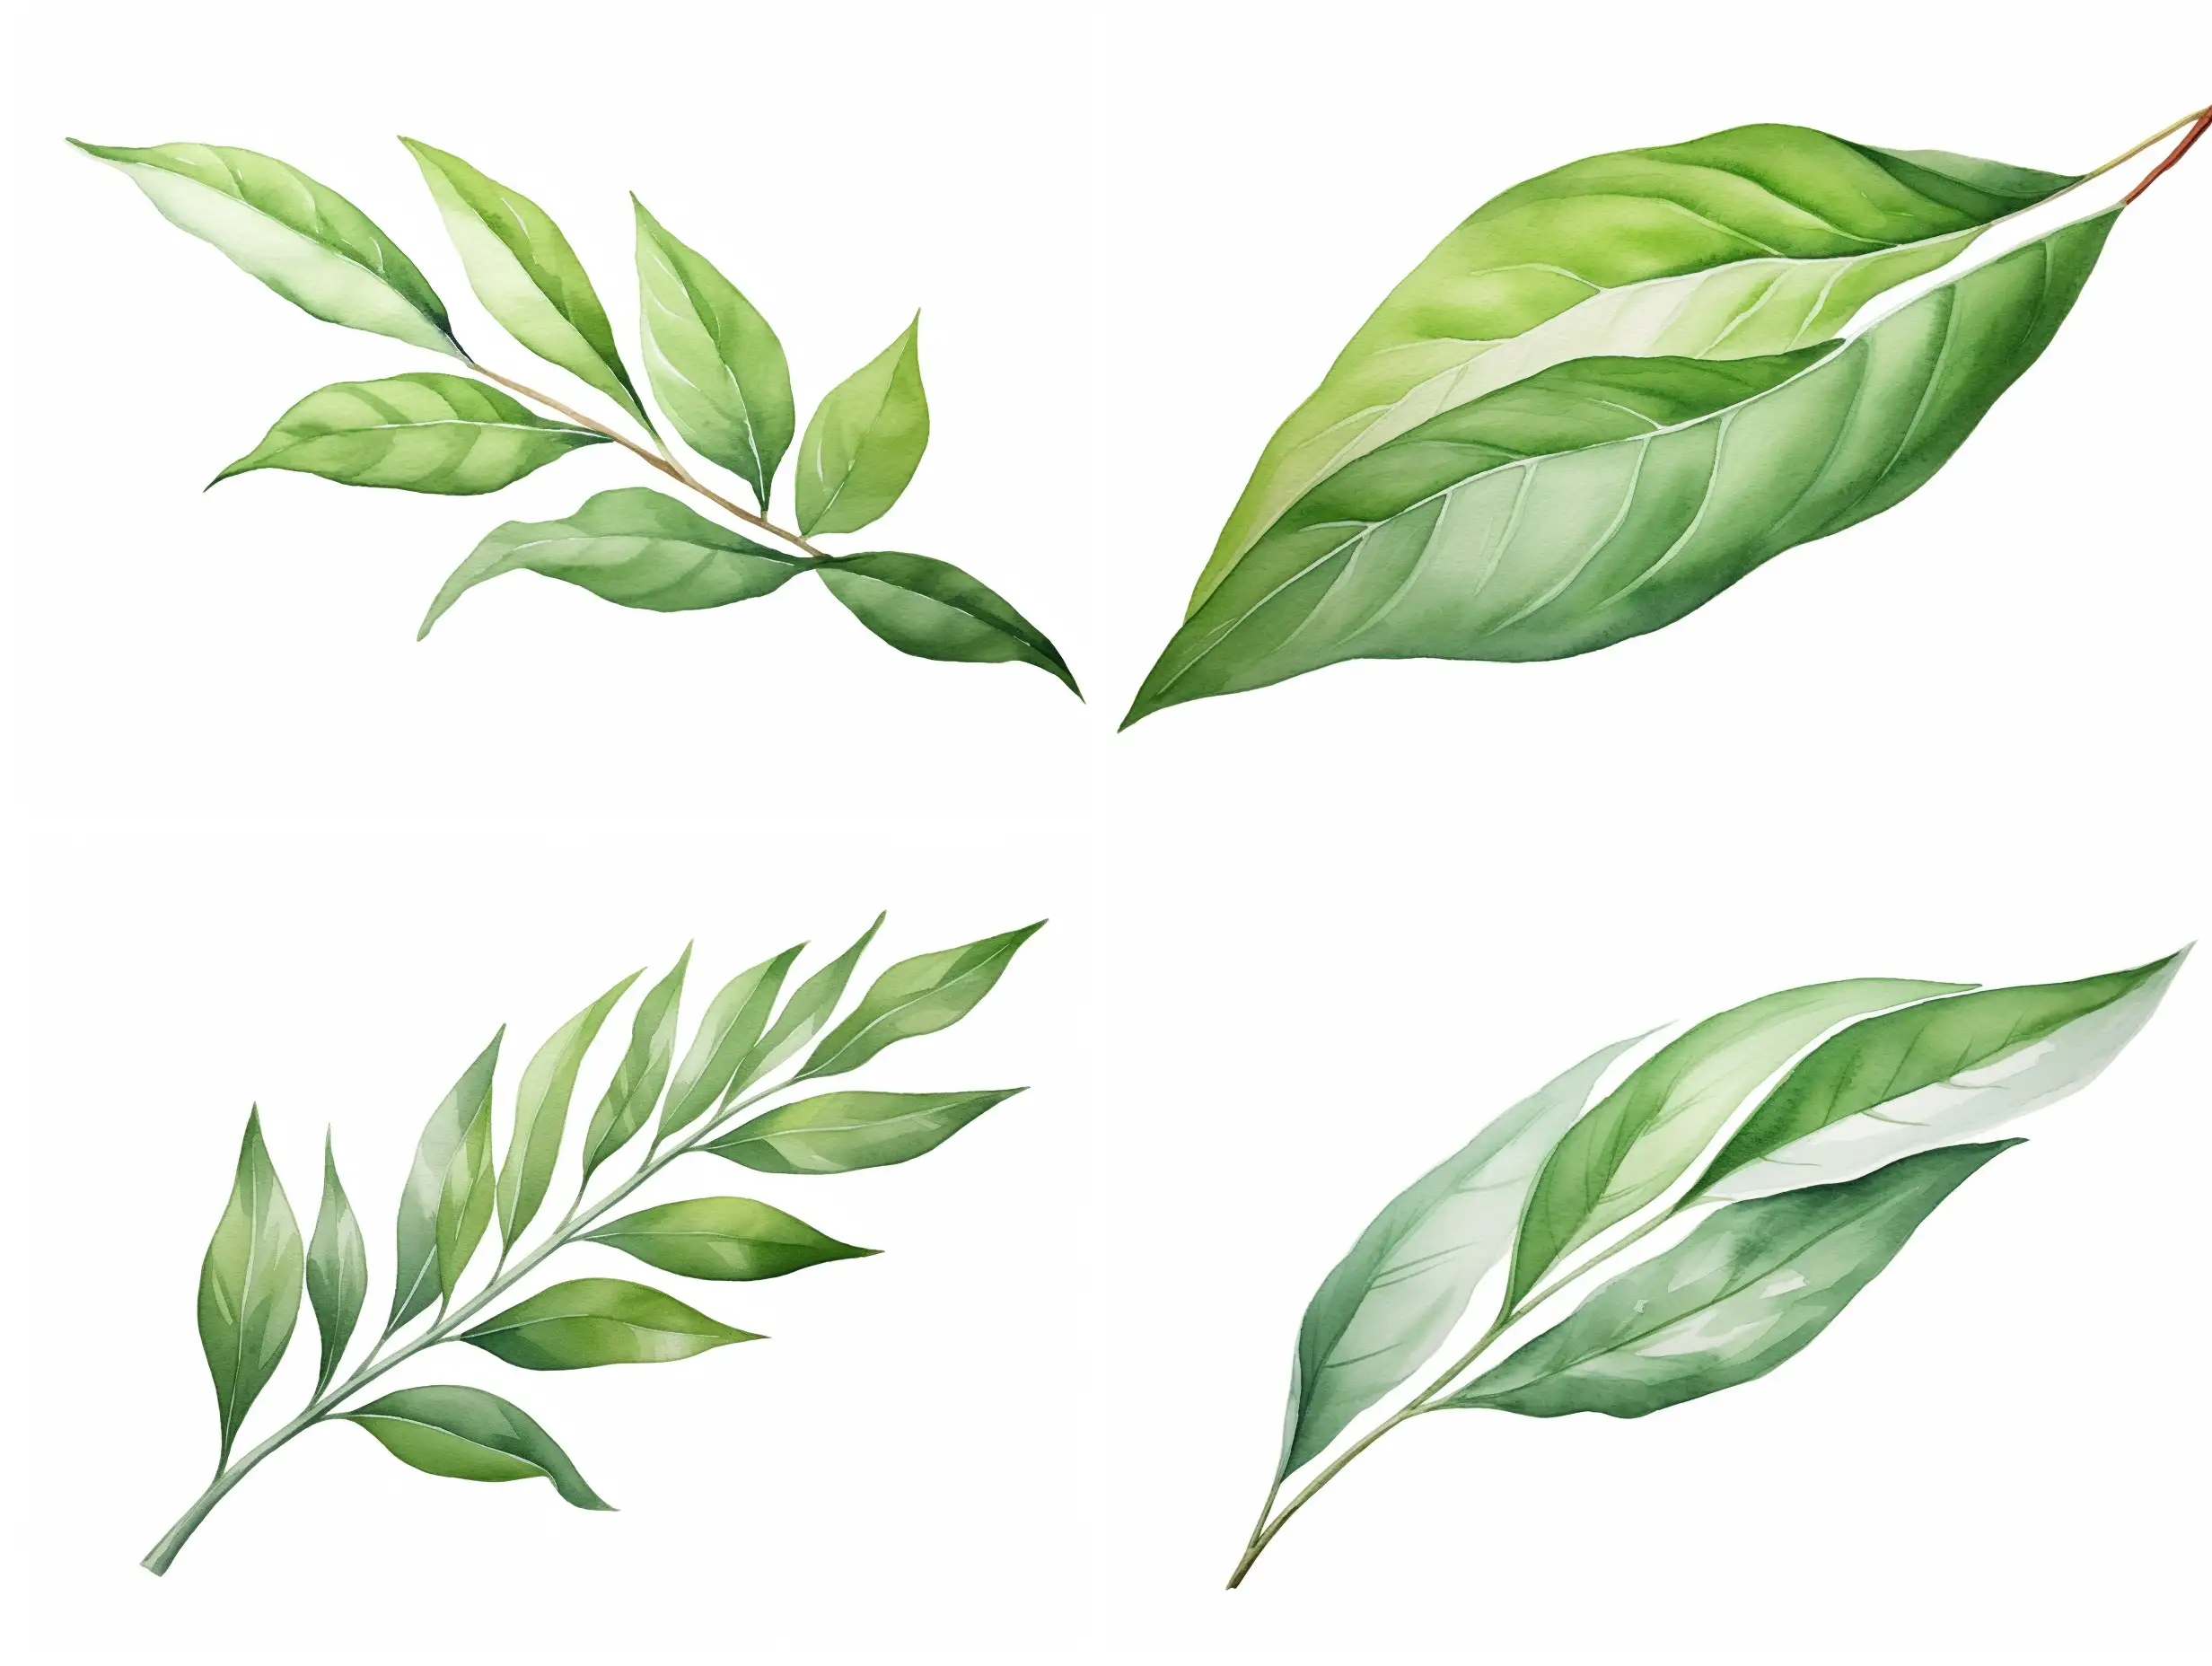 Exquisite-Watercolor-Green-Tea-Leaf-Illustration